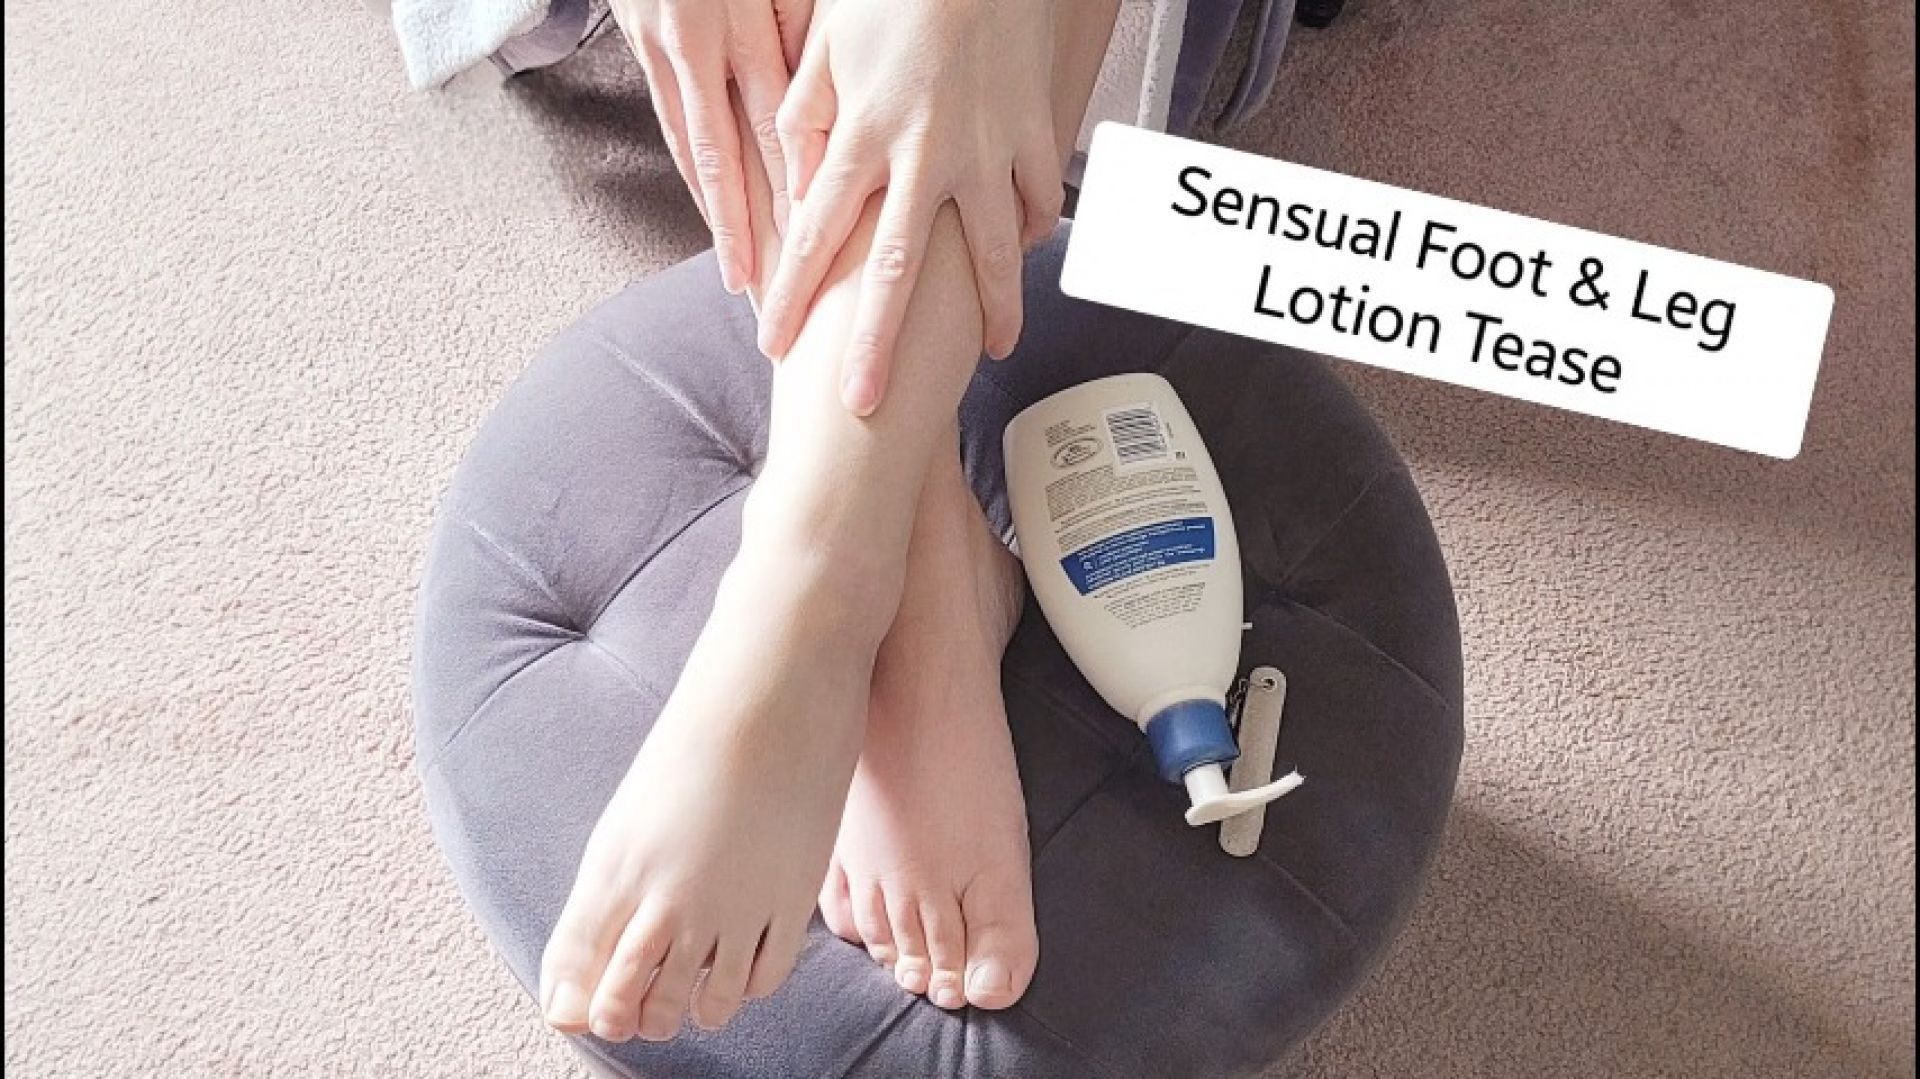 Sensual Foot and Leg Lotion Tease